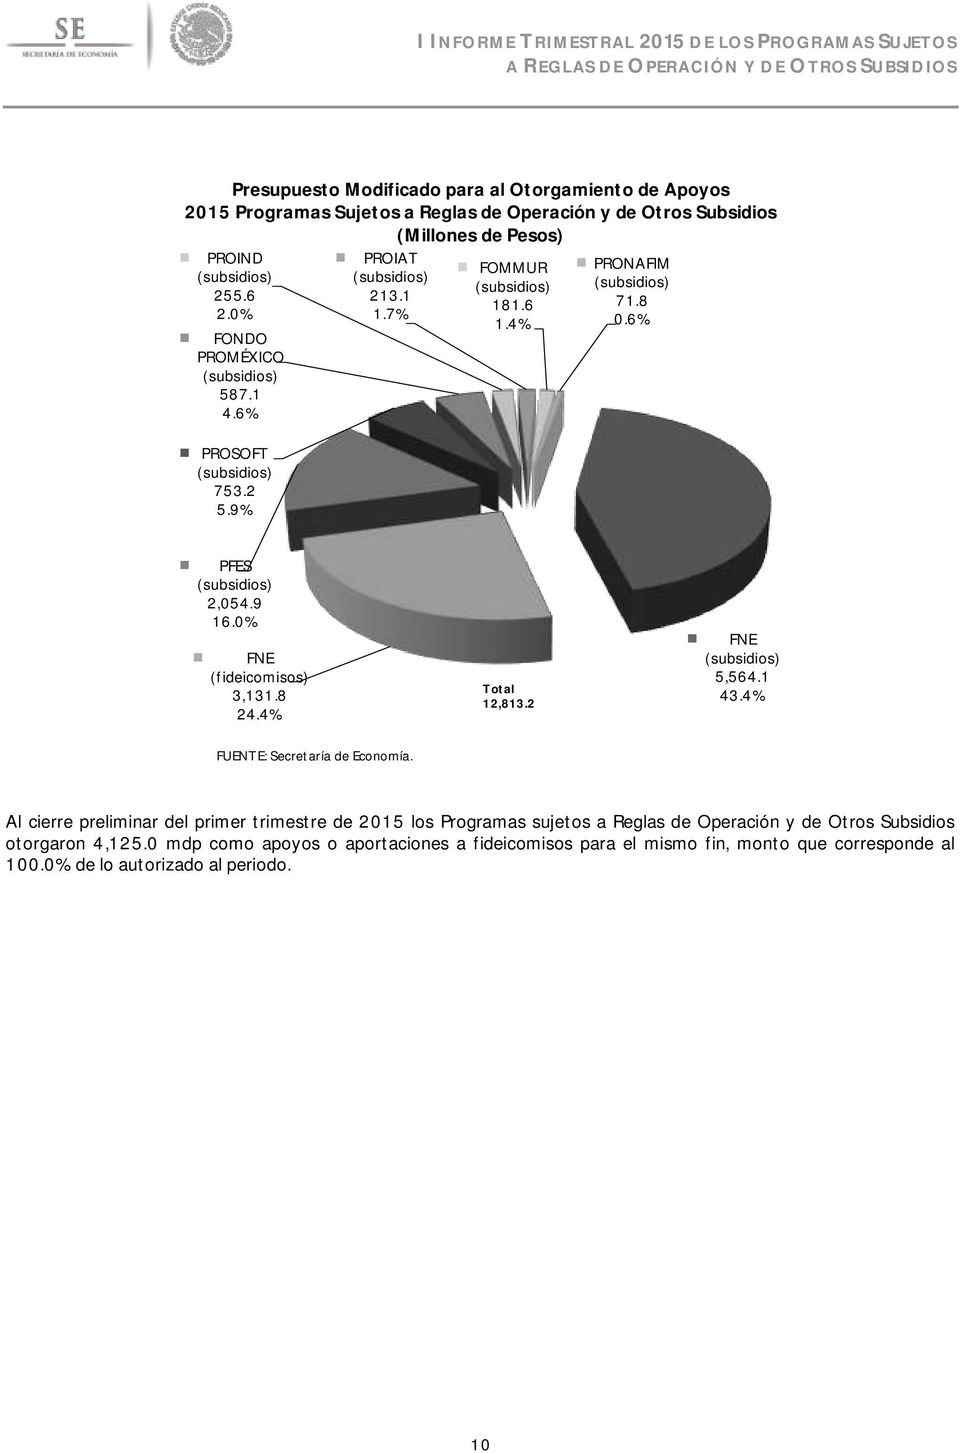 6% PFES (subsidios) 2,054.9 16.0% FNE (fideicomisos) 3,131.8 24.4% Total 12,813.2 FNE (subsidios) 5,564.1 43.4% FUENTE: Secretaría de Economía.